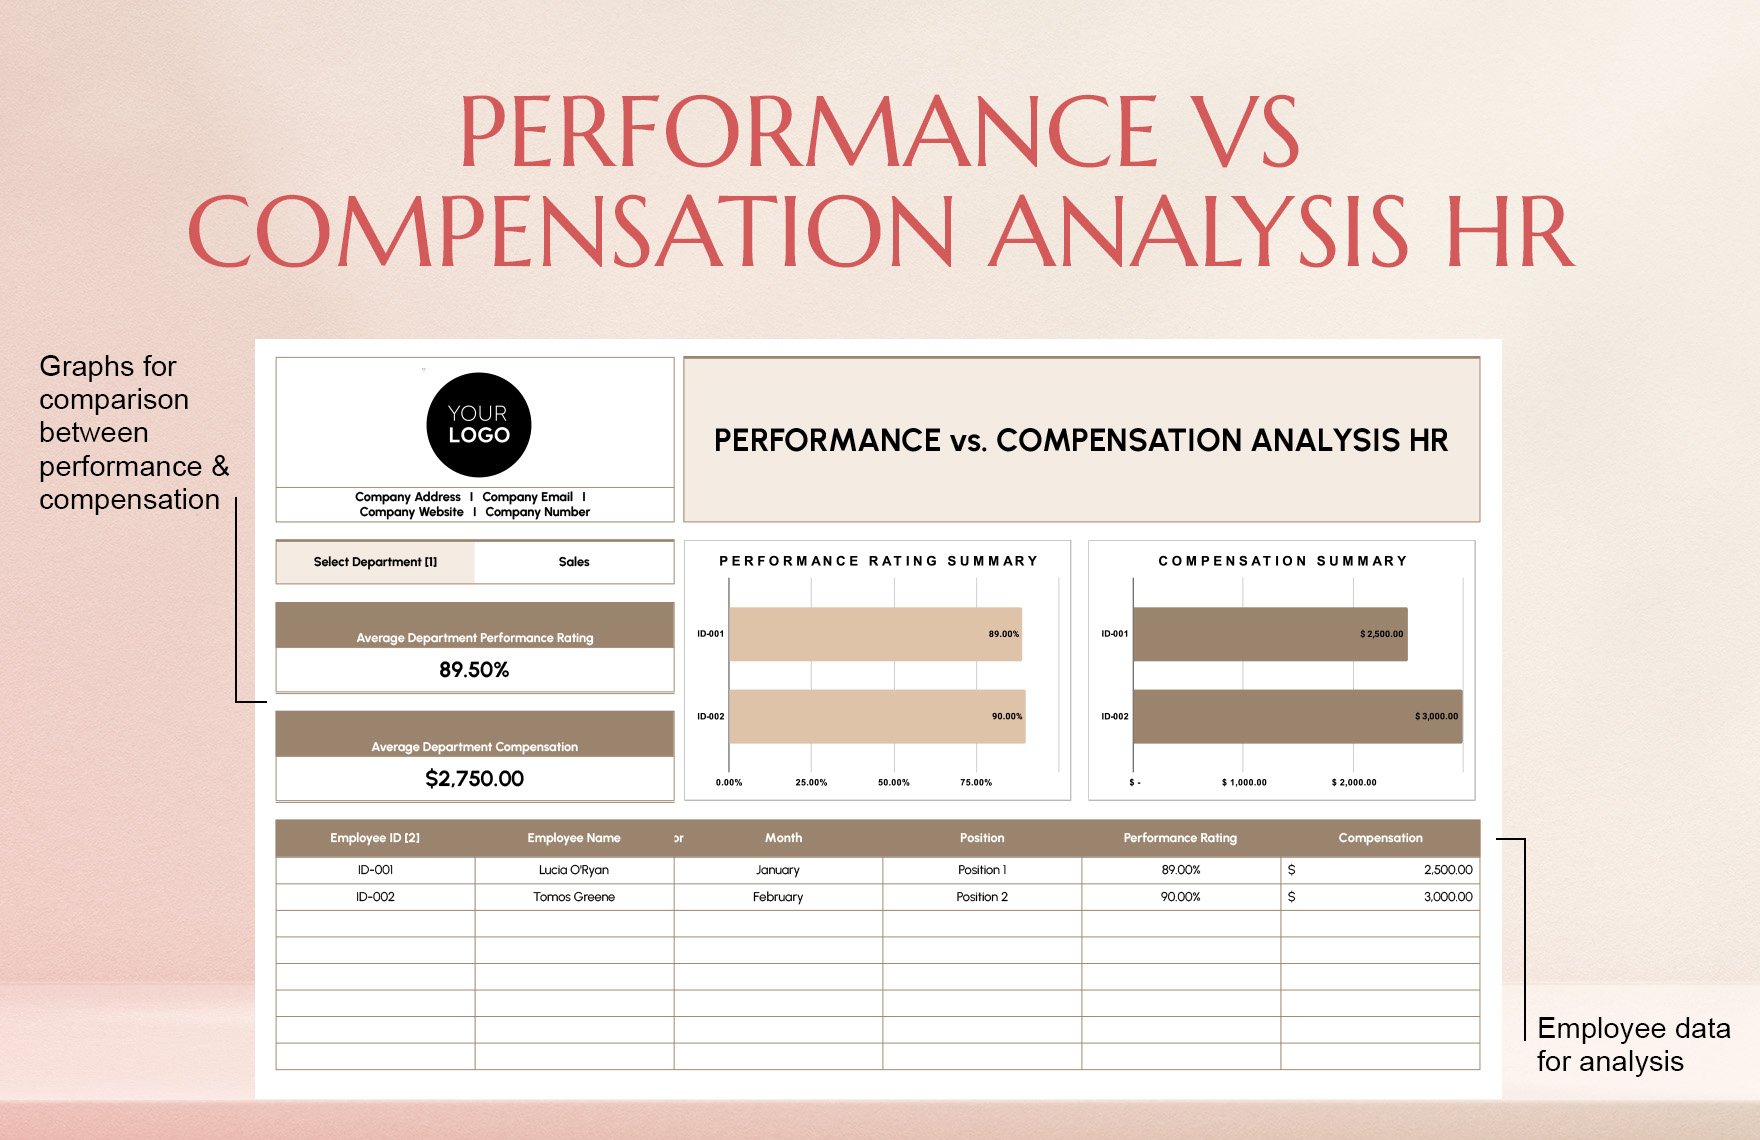 Performance vs Compensation Analysis HR Template